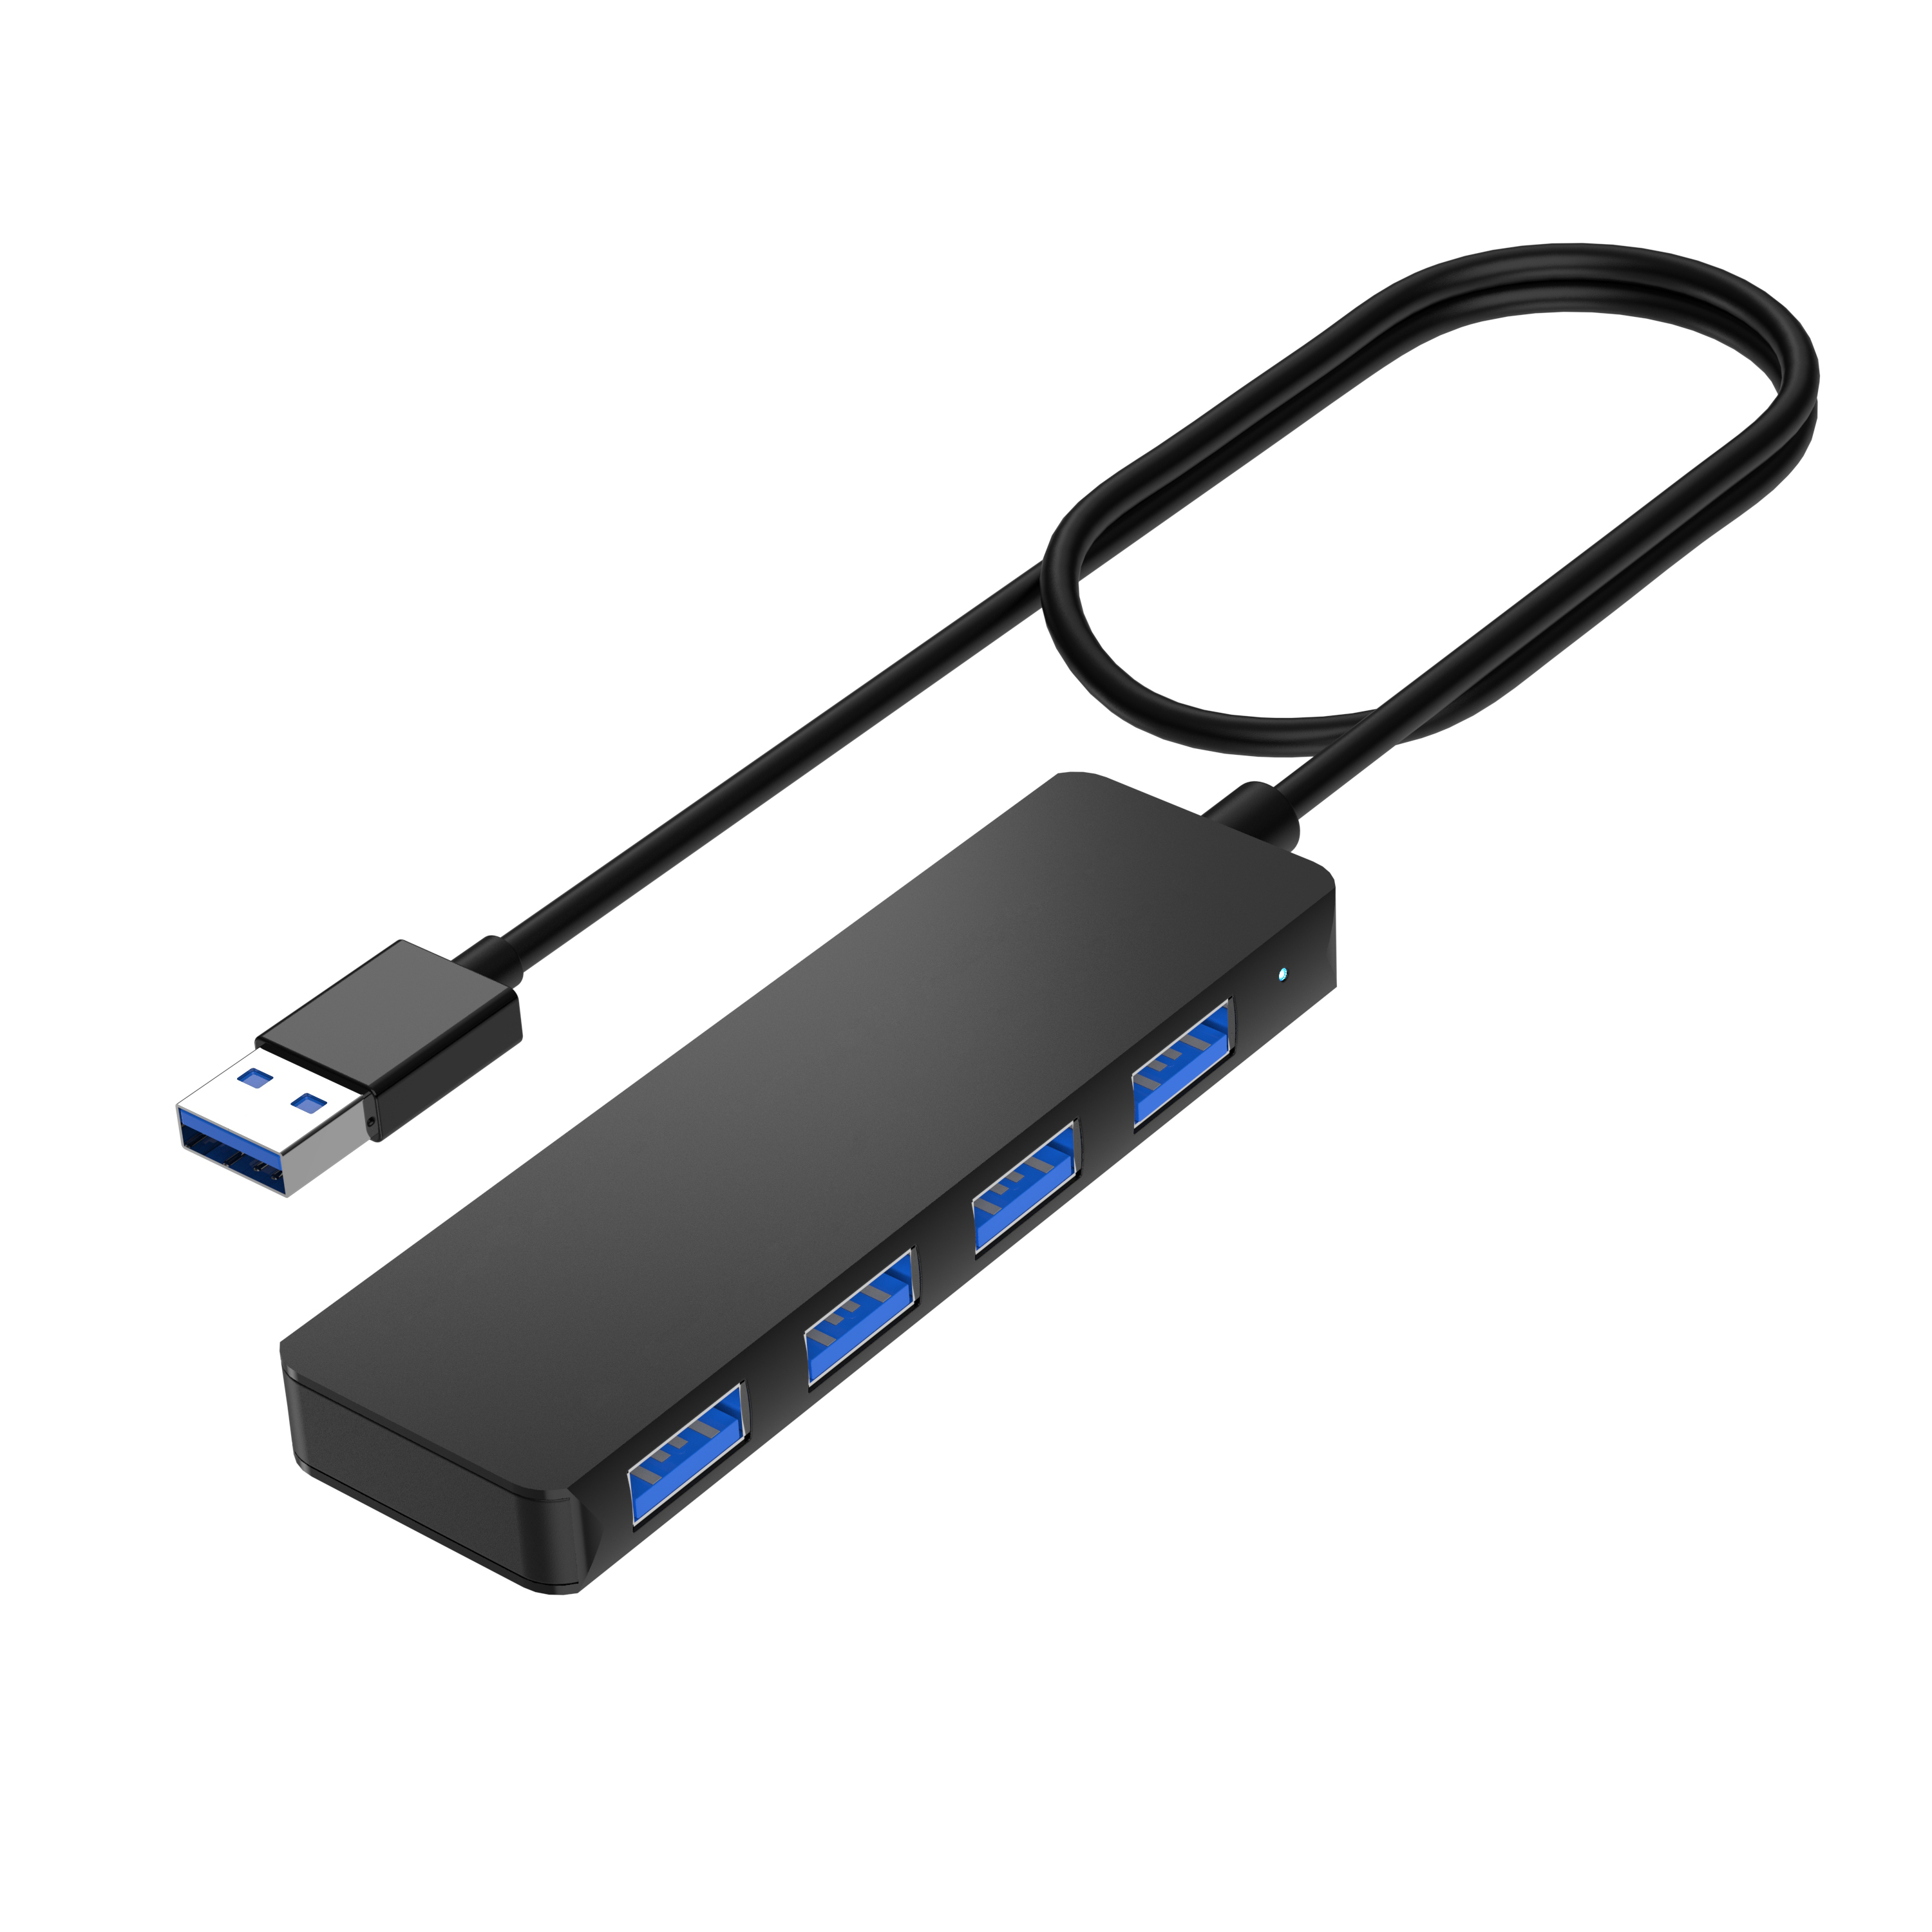 4 IN 1 USB HUB USB-A plug to 4xUSB-A 3.0 port docking station for laptop